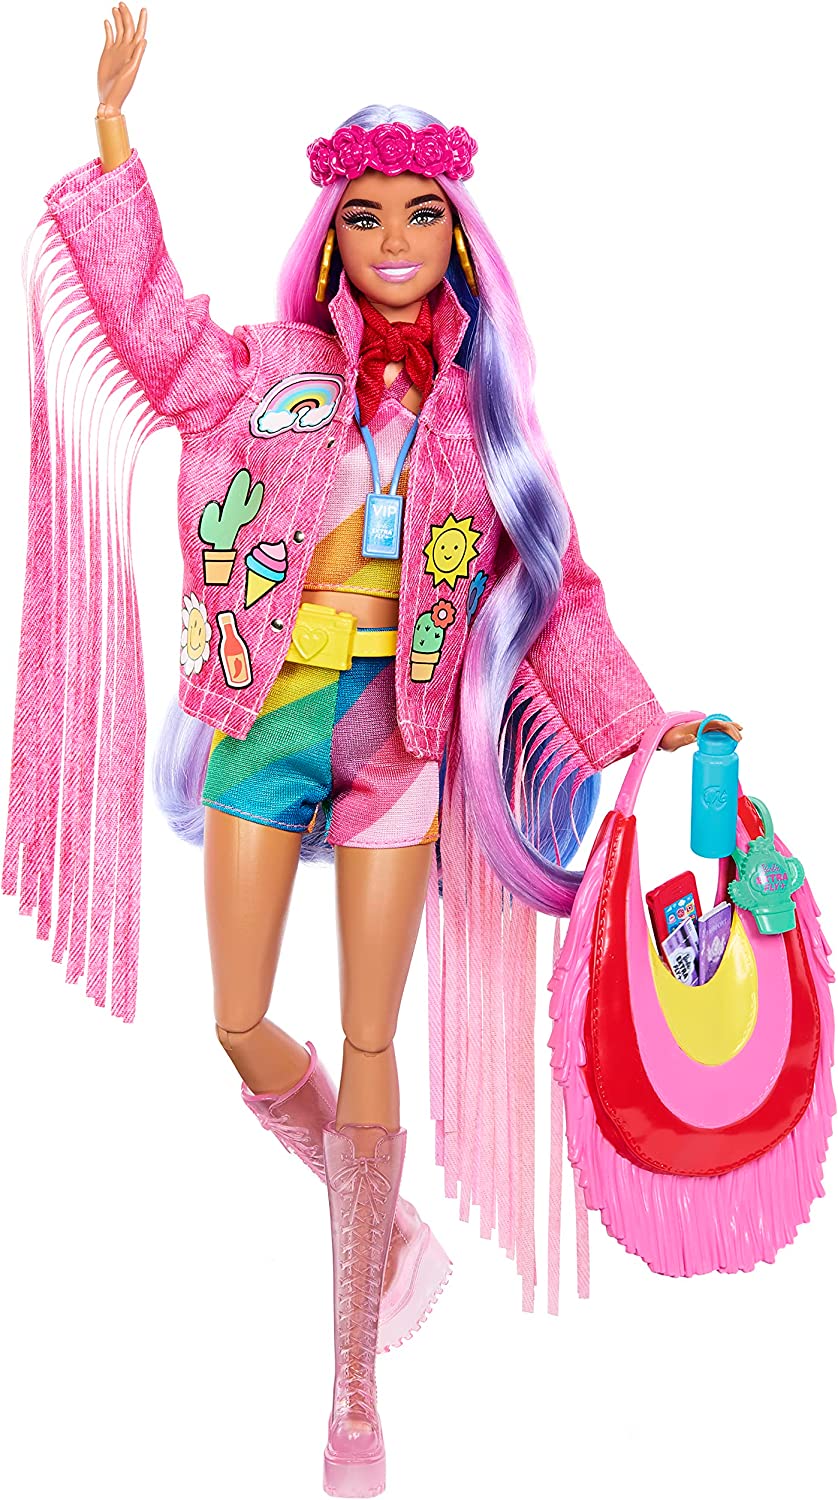 Barbie Extra Fly Safari Doll